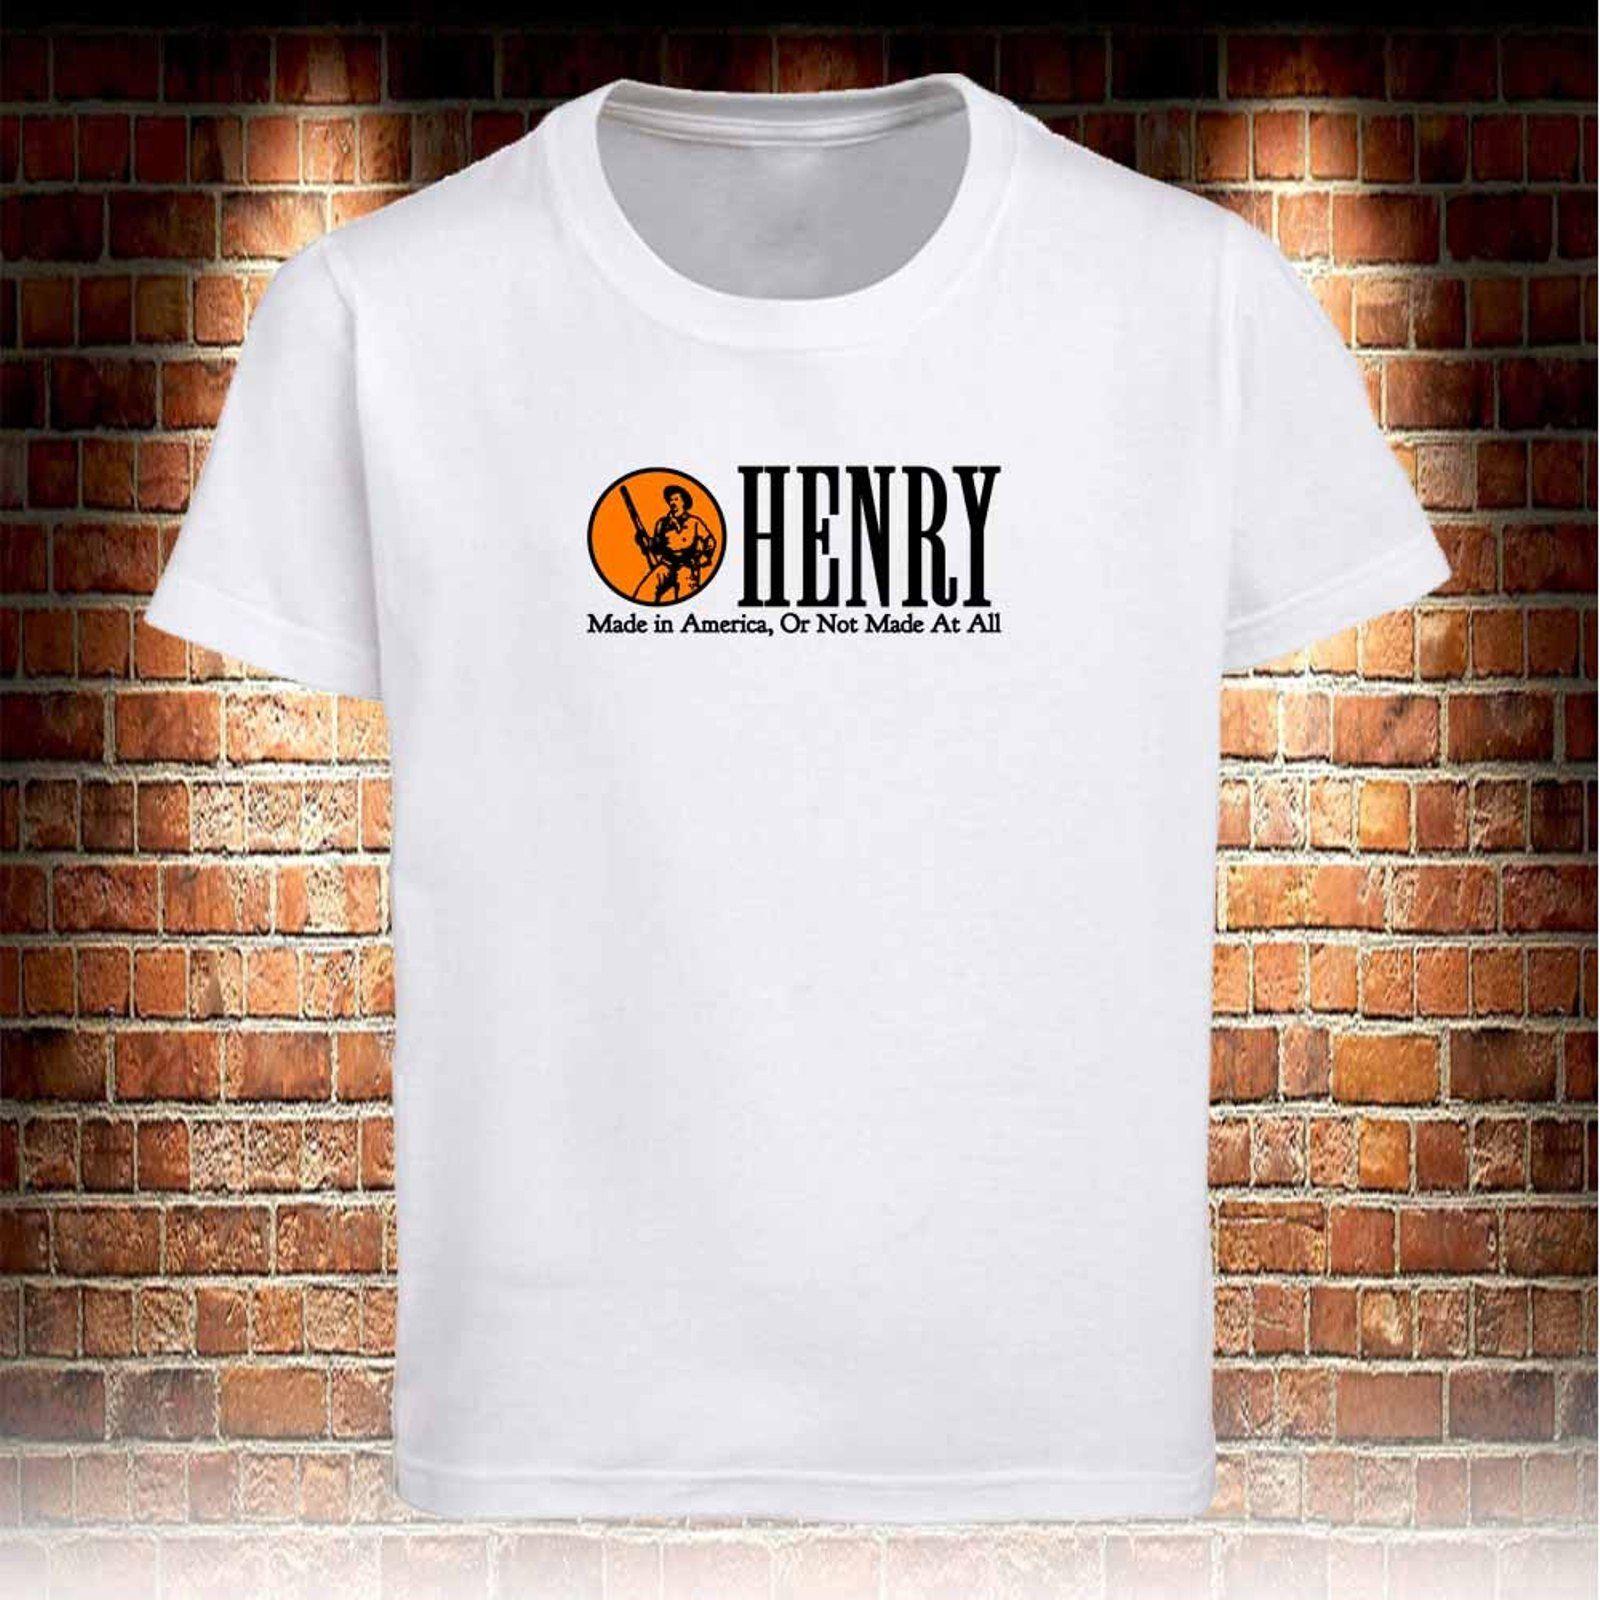 Henry Repeating Arms Logo - Henry Repeating Arms Firearms Logo White T Shirt Men'S Tshirt S To